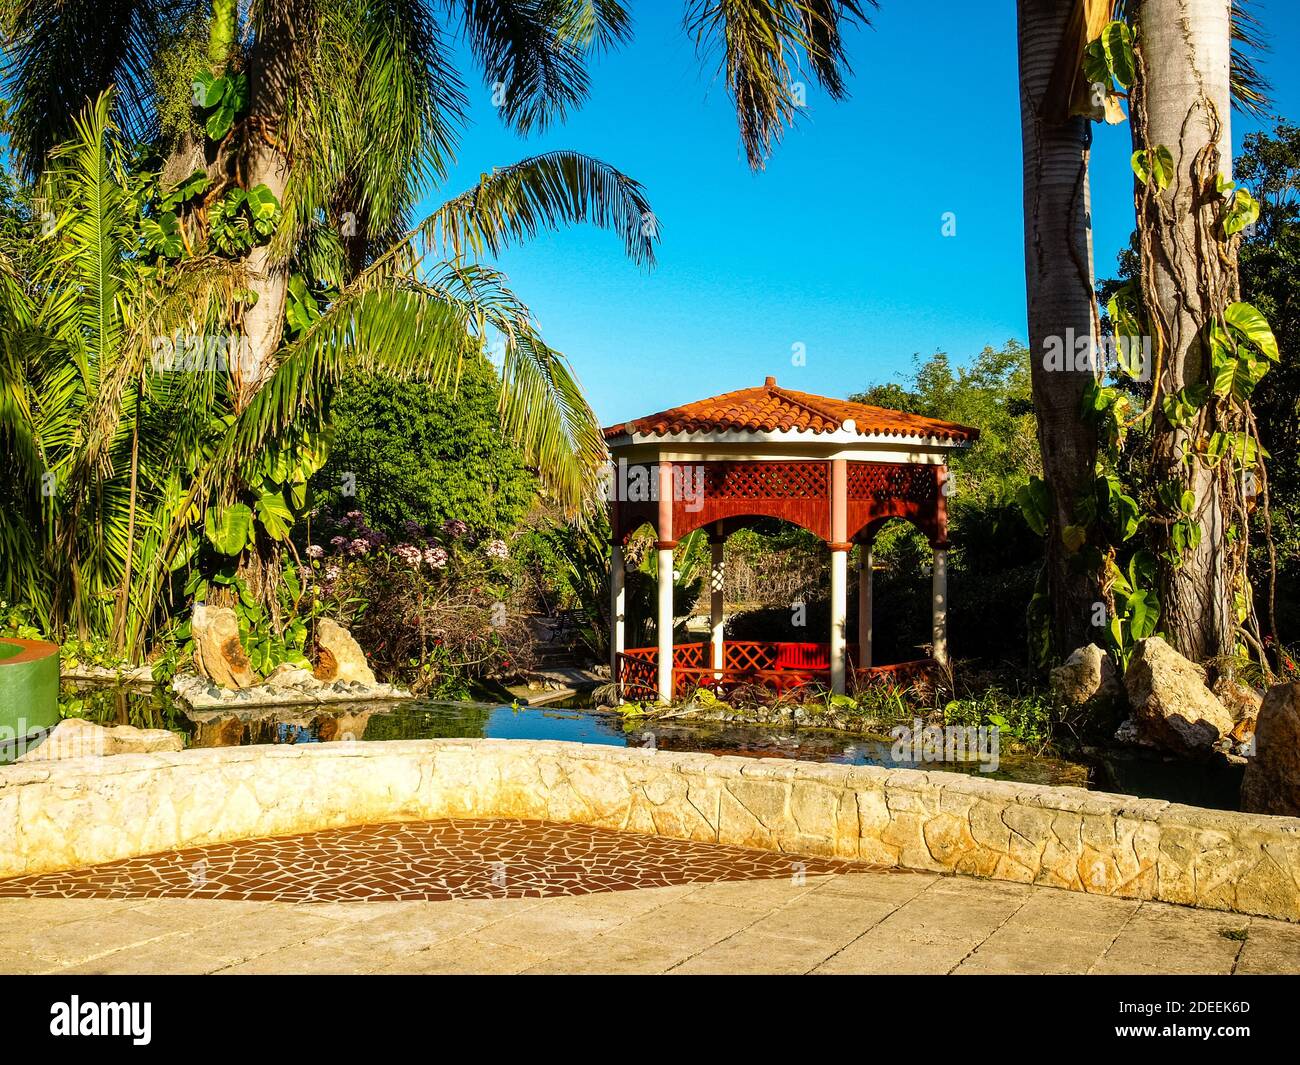 Parks and recreation - Cuba. Cuban spring - Beautiful tropical landscape Stock Photo